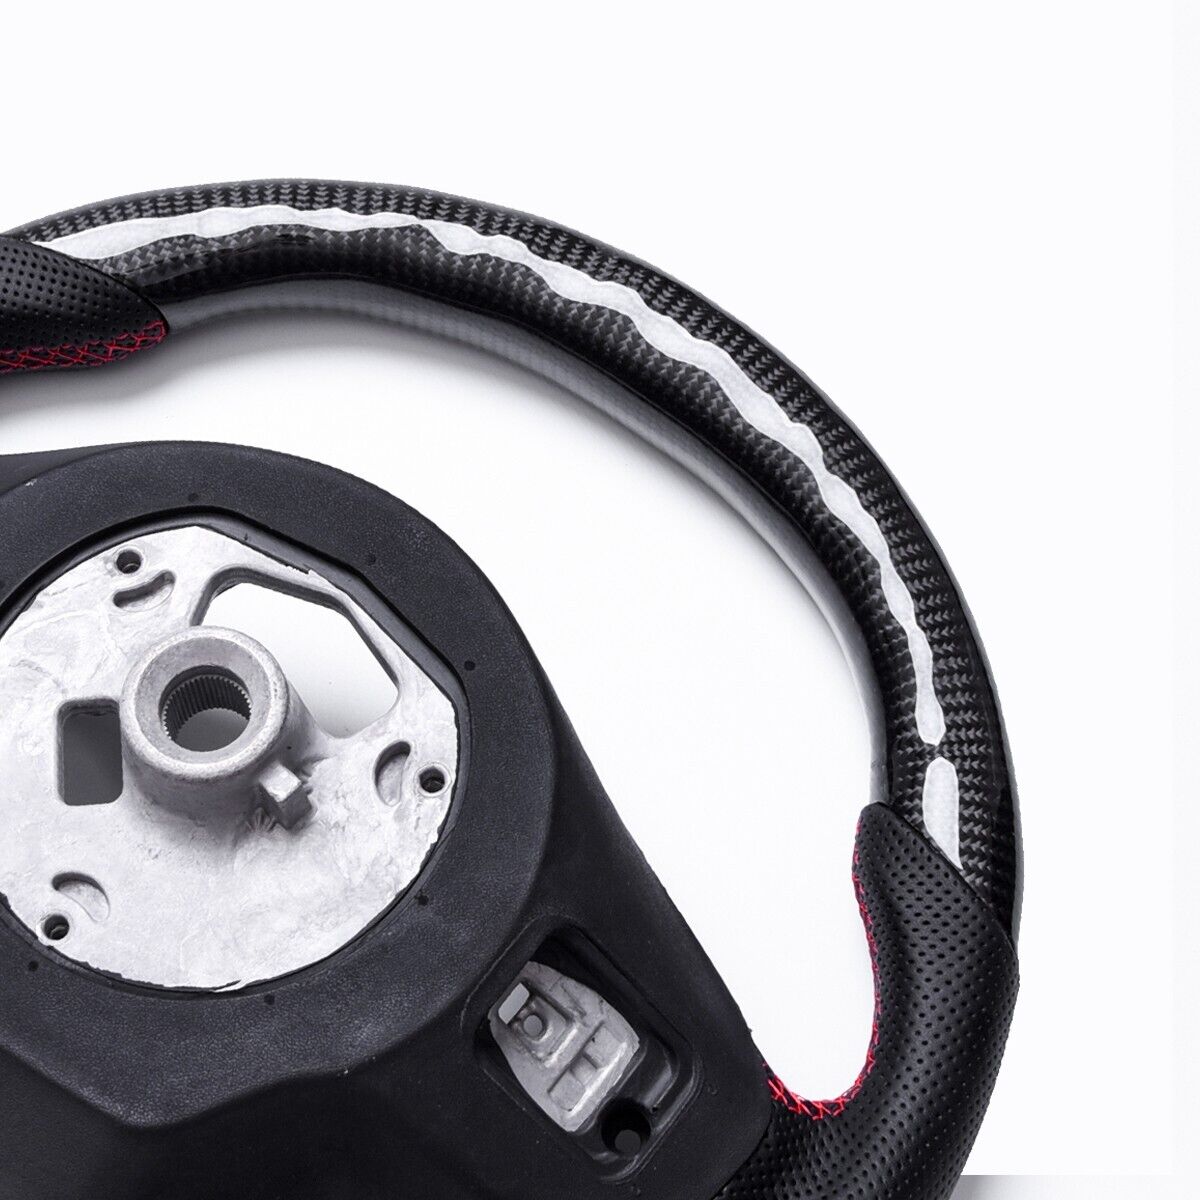 Revolve Carbon Fiber OEM Steering Wheel Toyota Supra A90 MKV 2019-2023 - revolvesteering